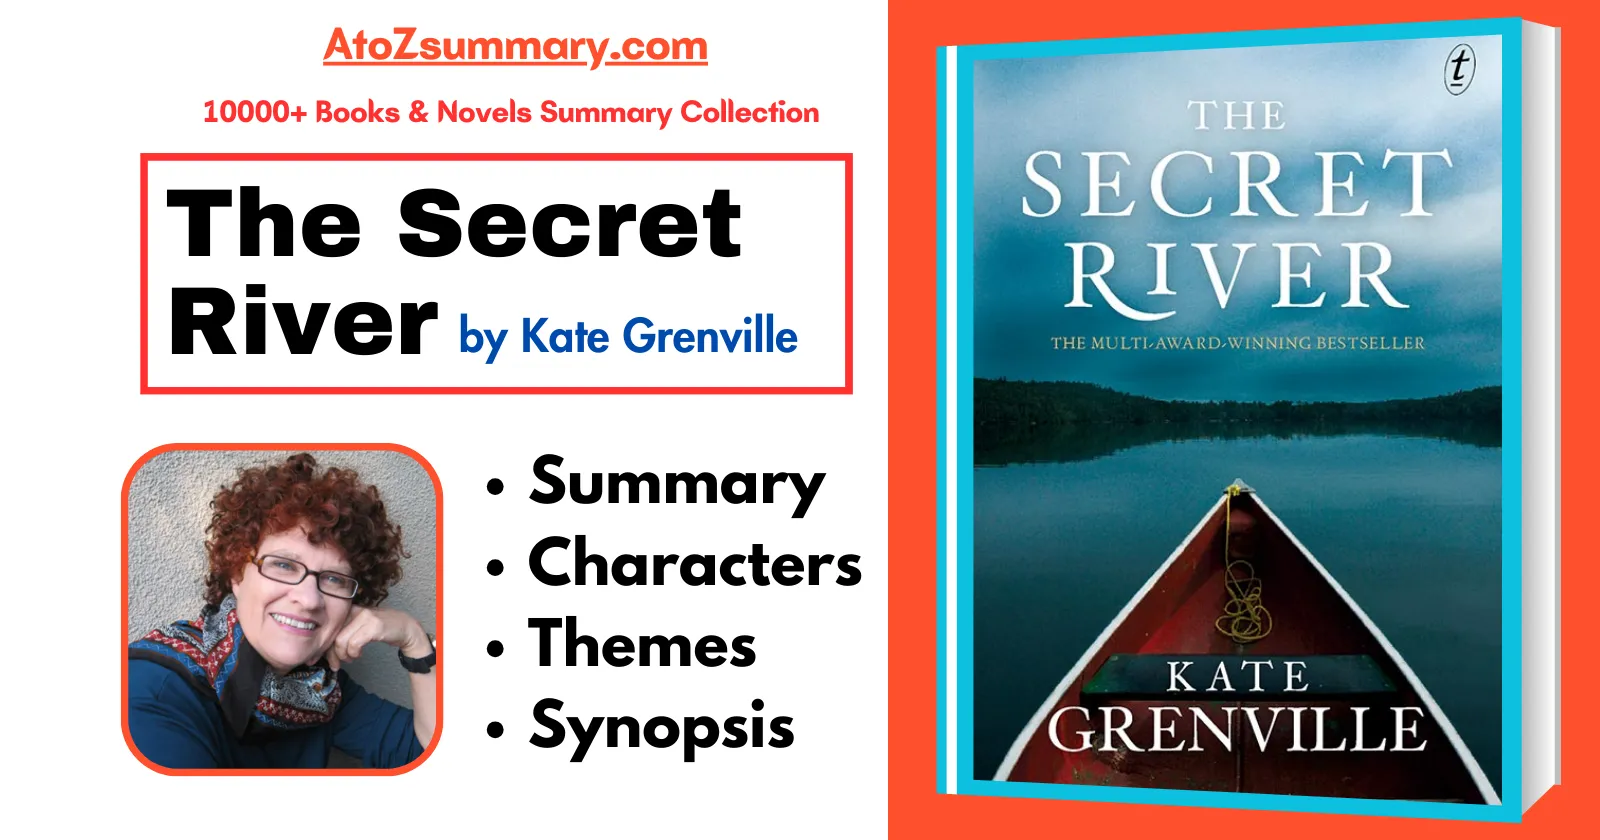 The Secret River Summary